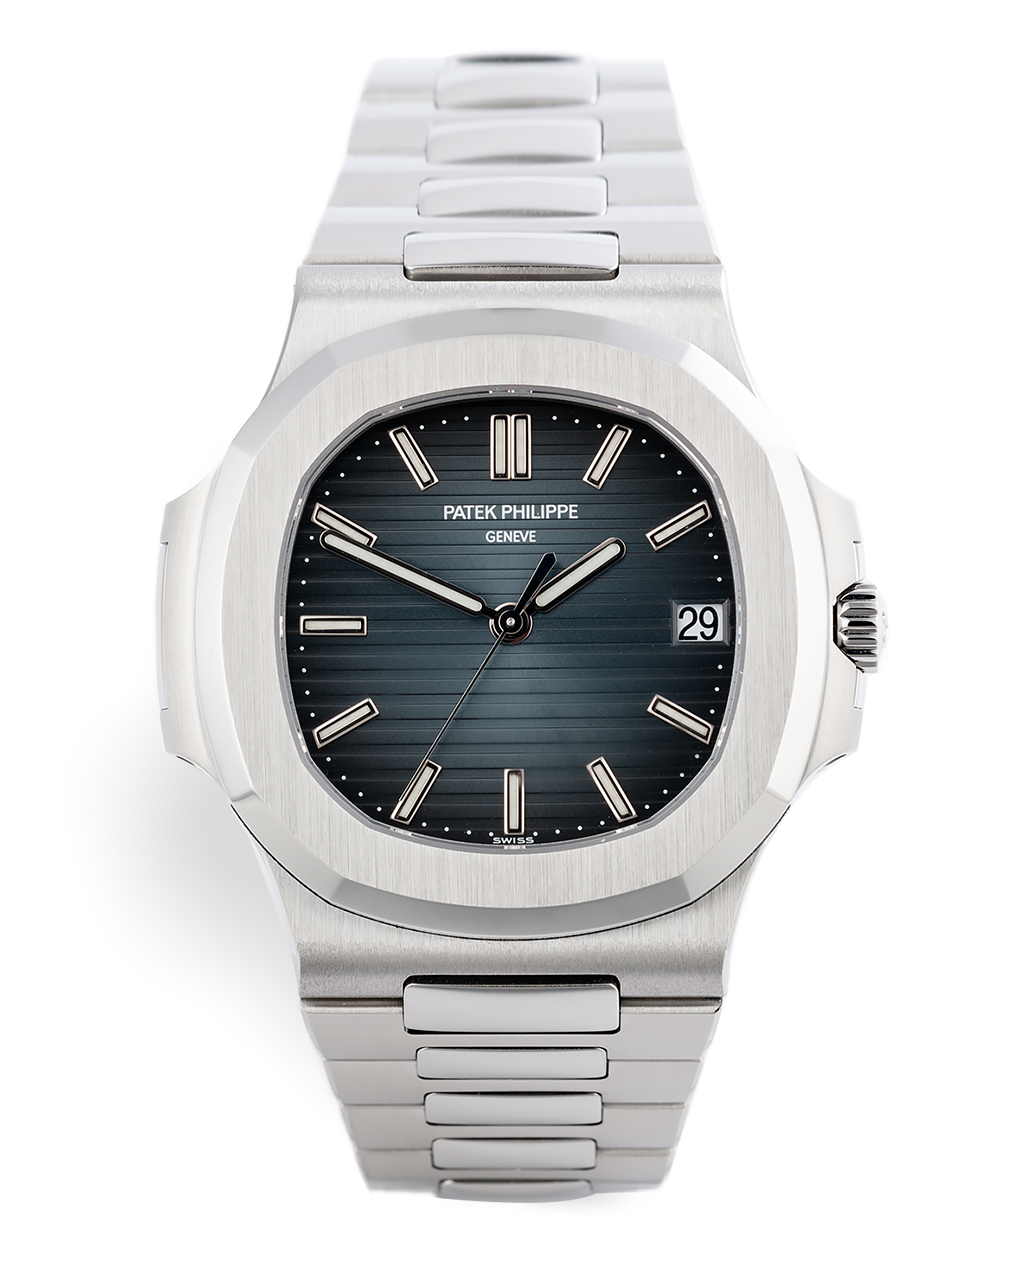 Patek Philippe Nautilus Watches | ref 5711/1A-010 | Box & Certificate ...